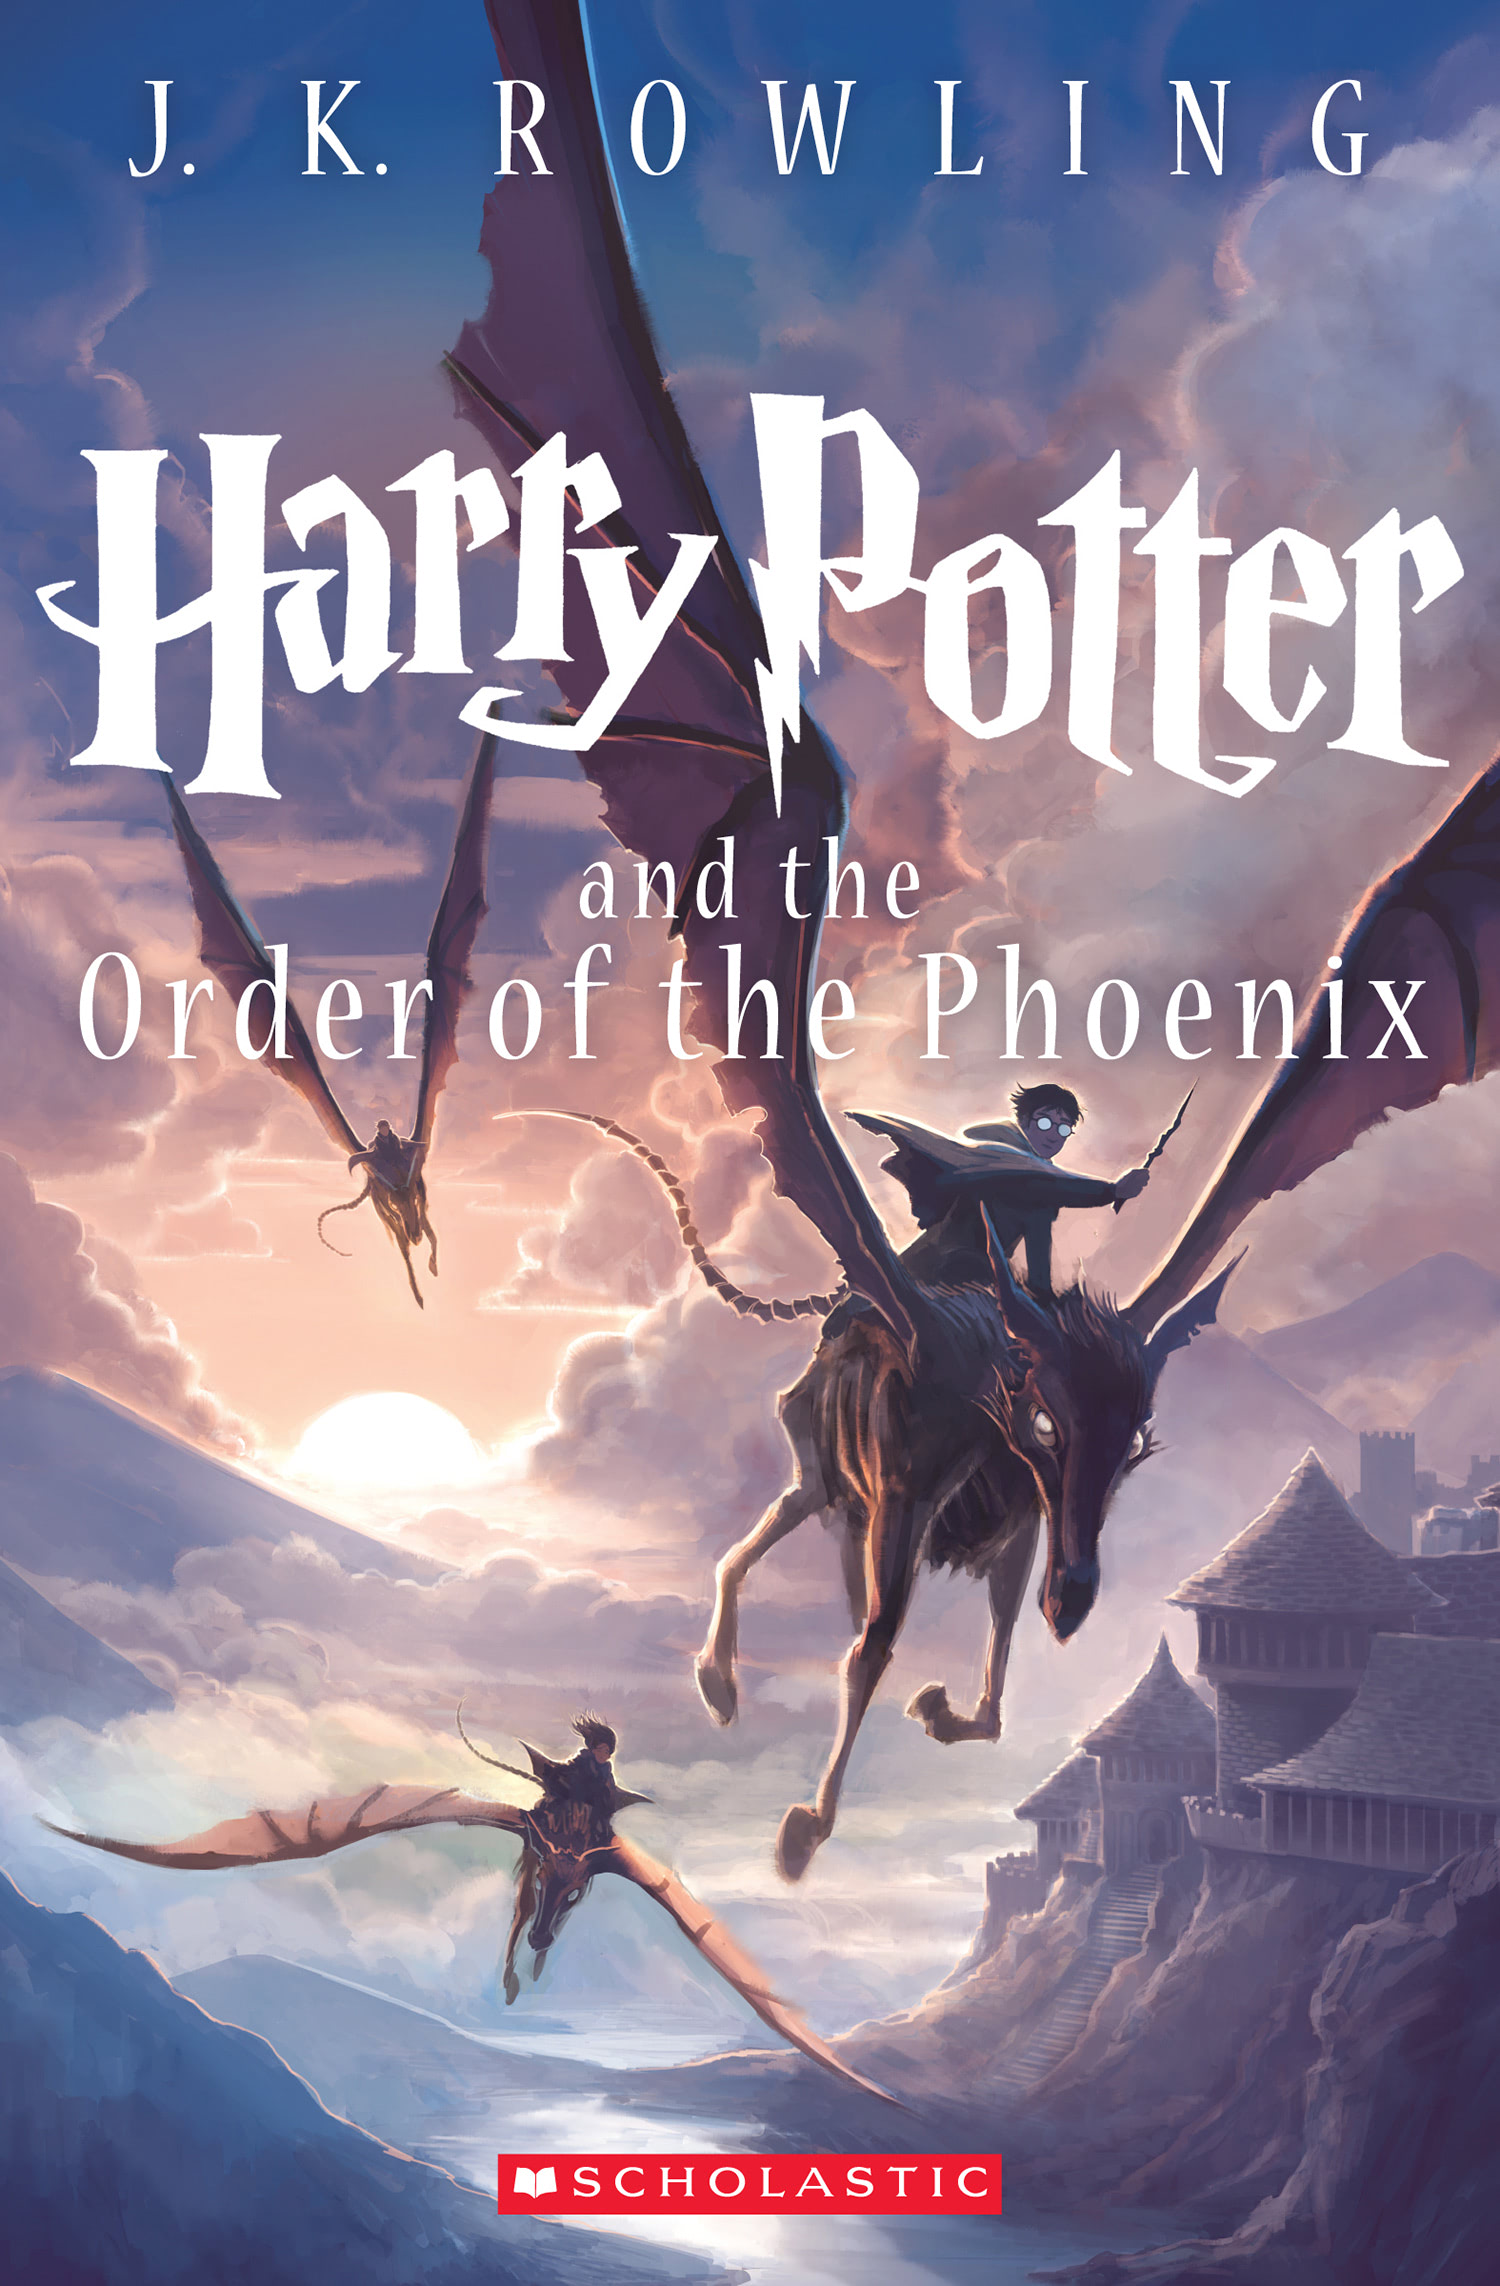 ‘Order of the Phoenix’ US children’s edition (2013)